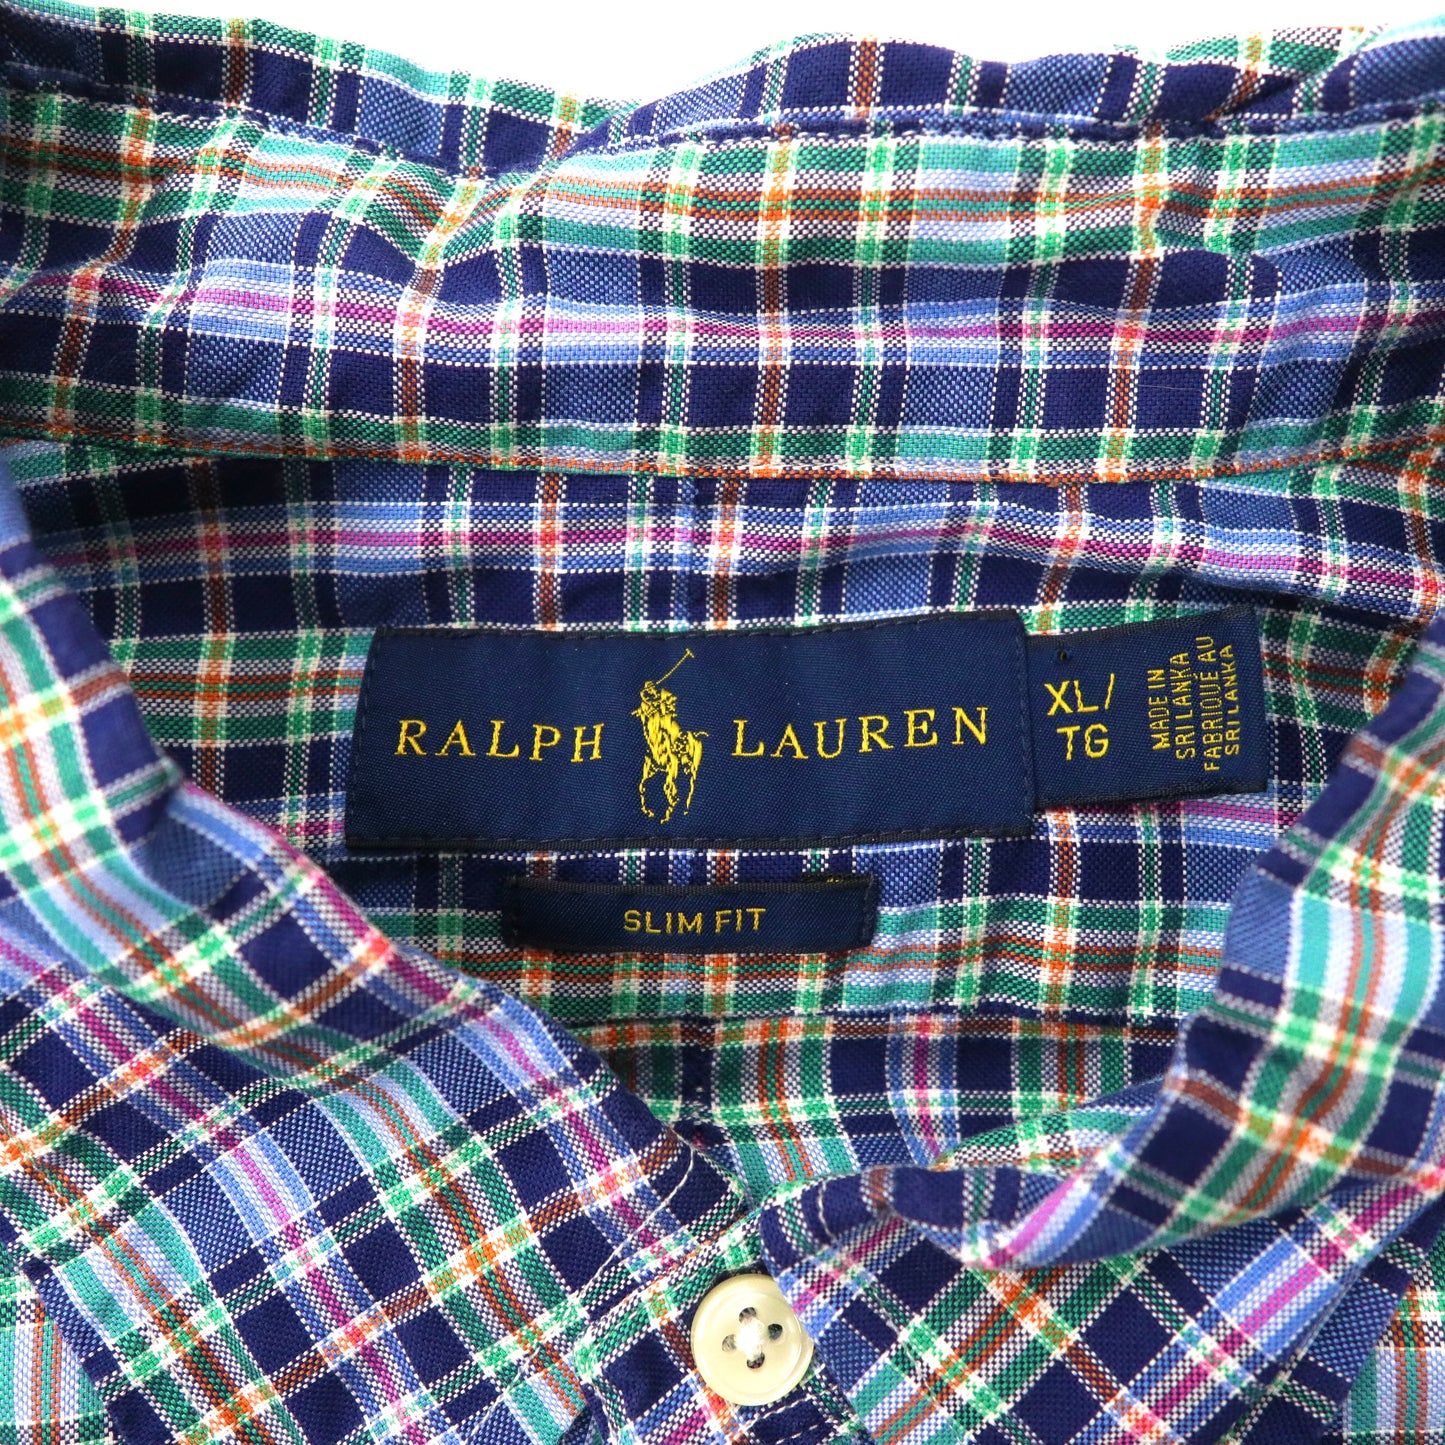 RALPH LAUREN ボタンダウンシャツ XL ブルー チェック コットン SLIM FIT スモールポニー刺繍